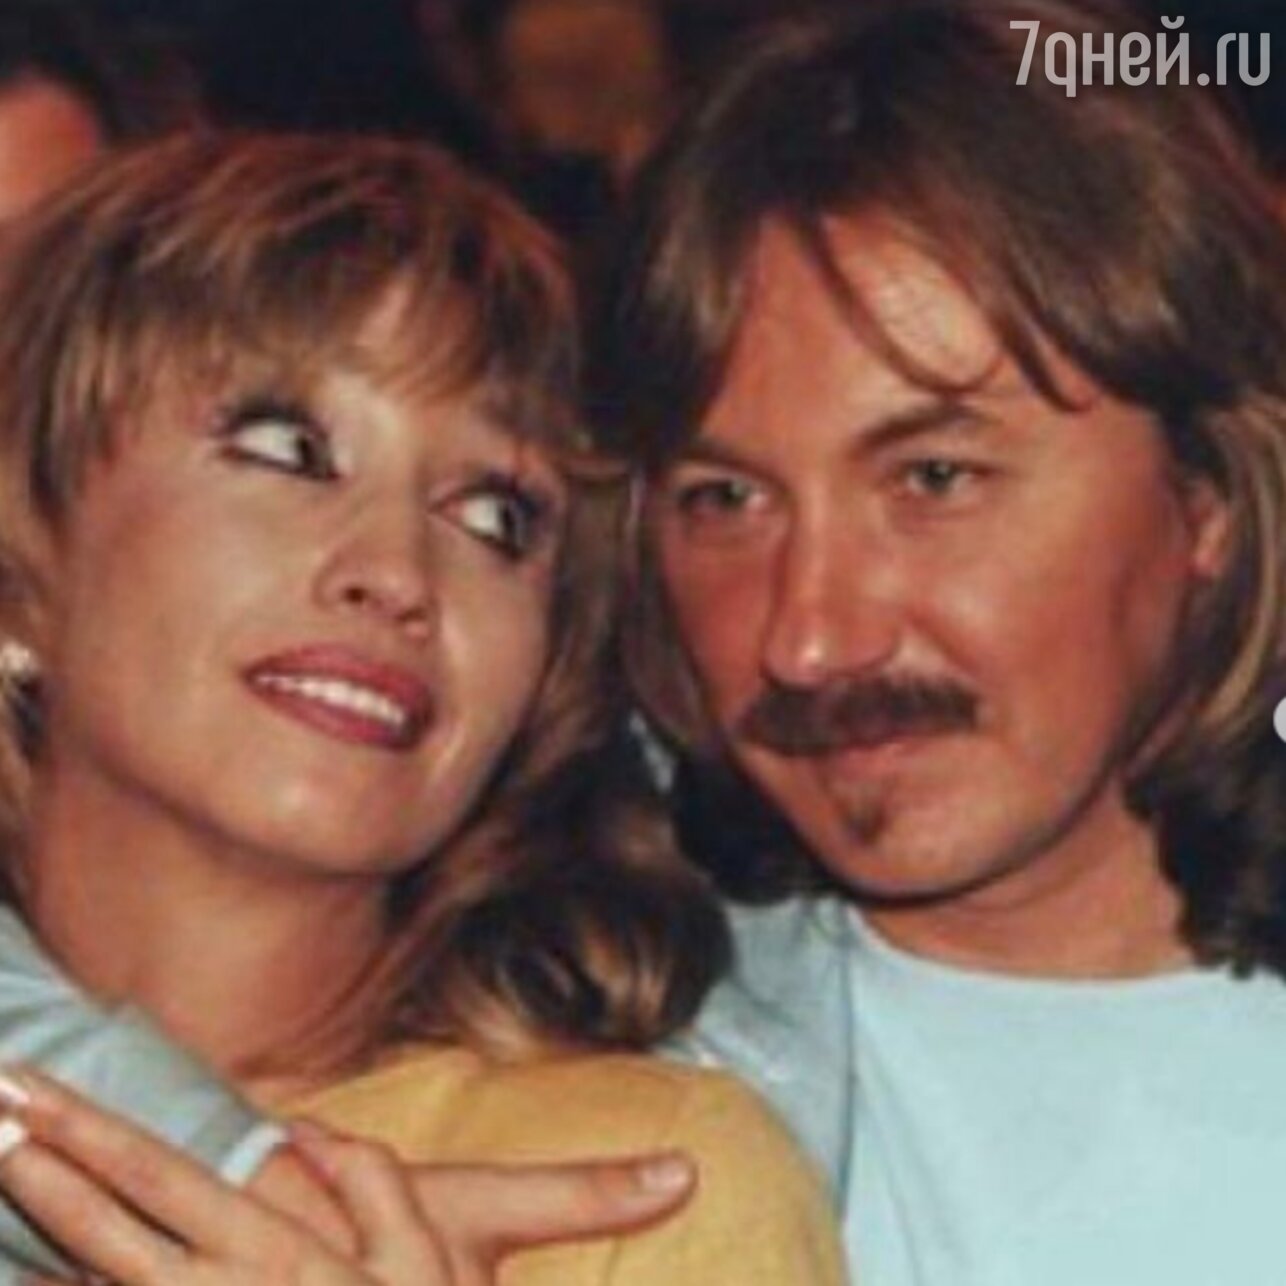 Ирина Аллегрова и Игорь Николаев